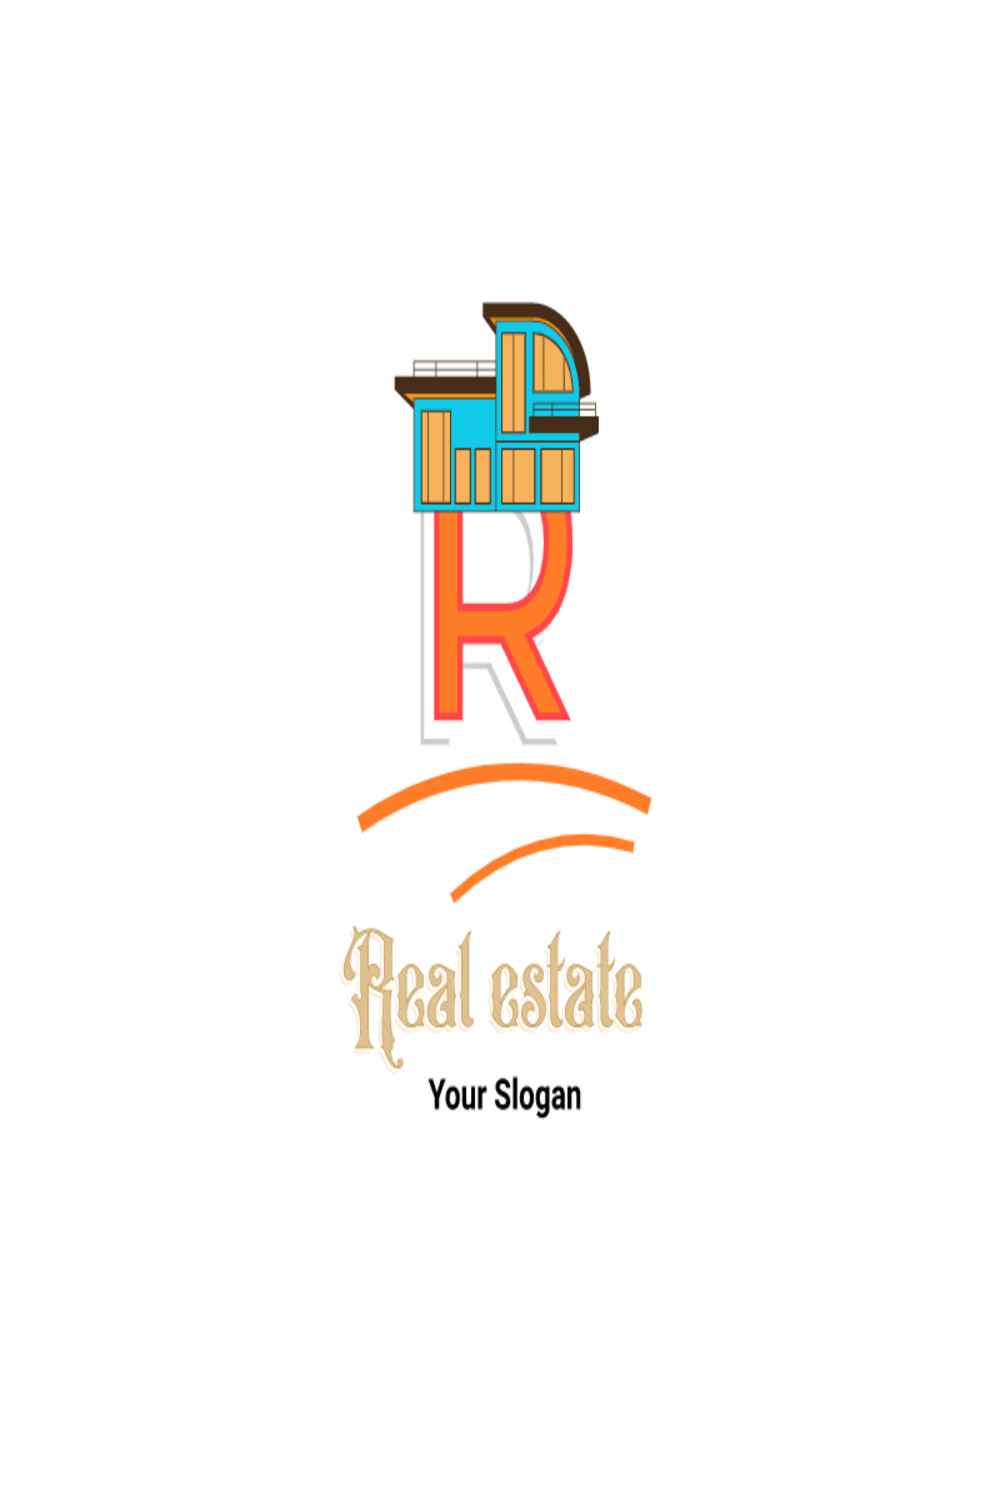 R - Real Estate Letter Logo Design Template pinterest preview image.